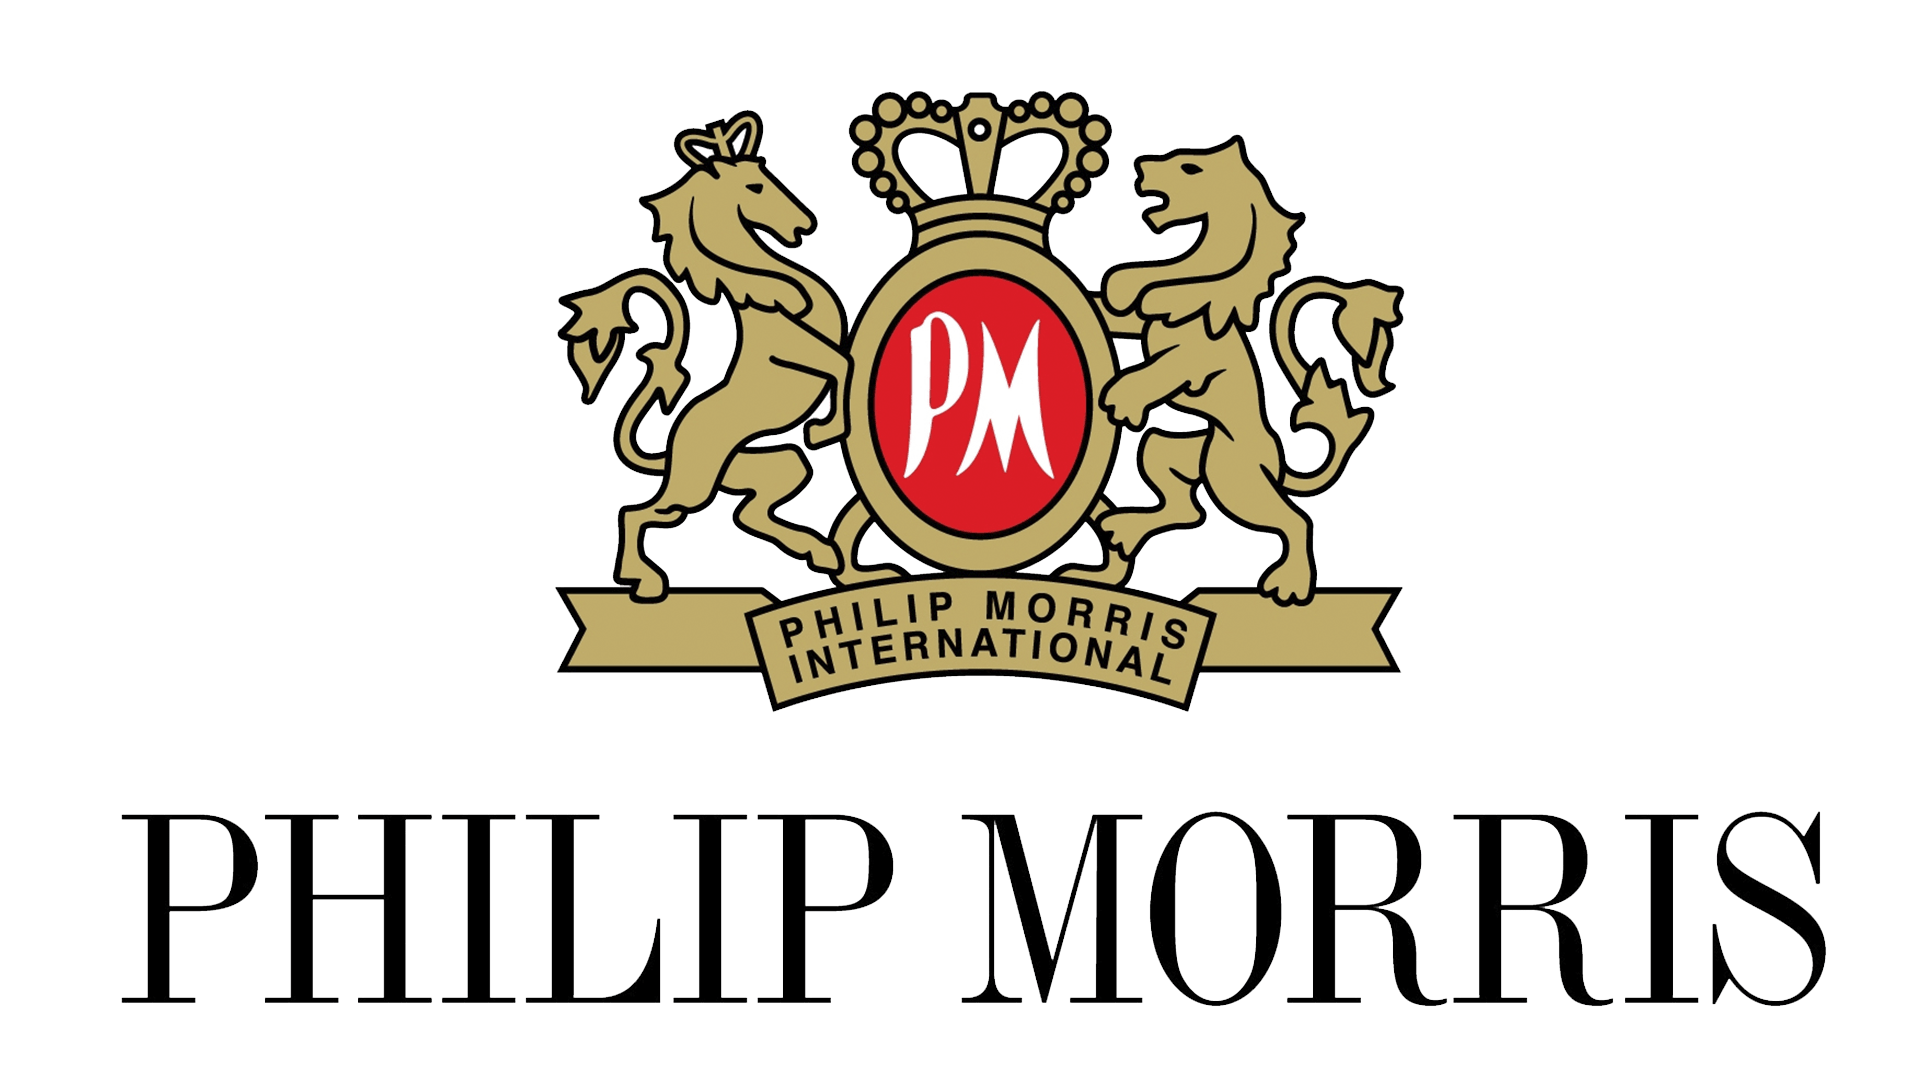 Philip Morris Logo - Philip Morris logo, symbol, meaning, History and Evolution